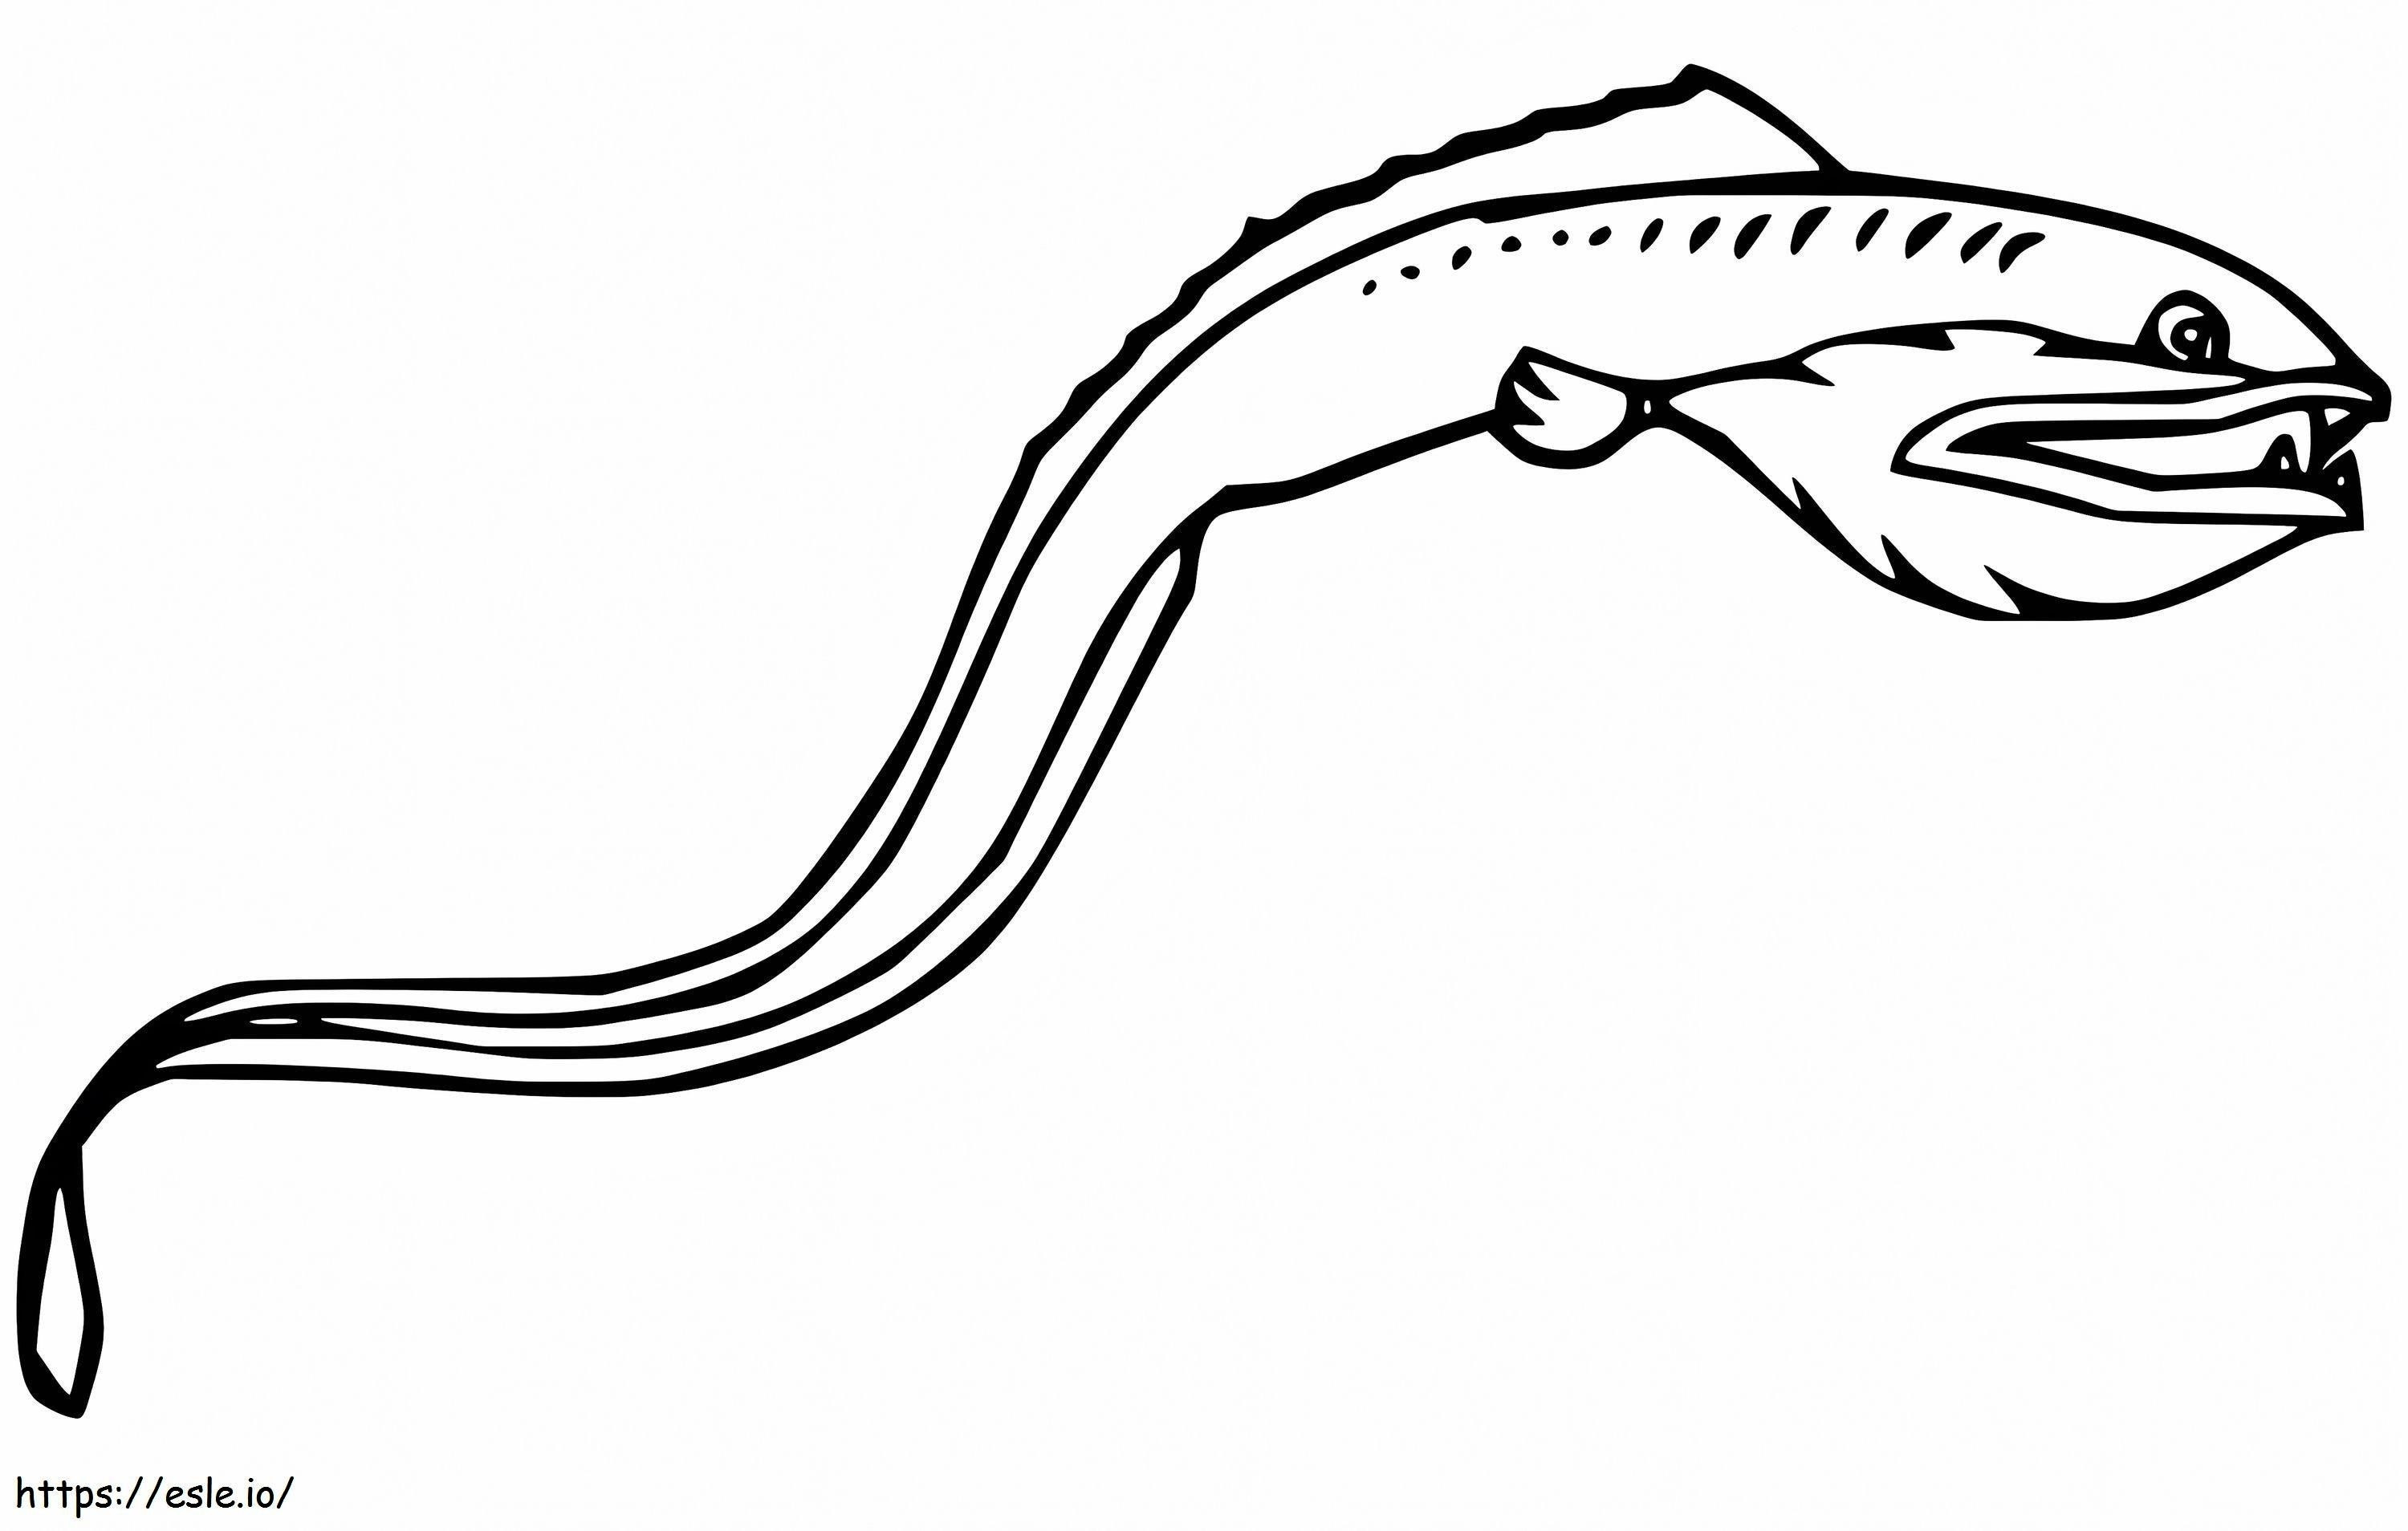 Viperfish Swimming coloring page